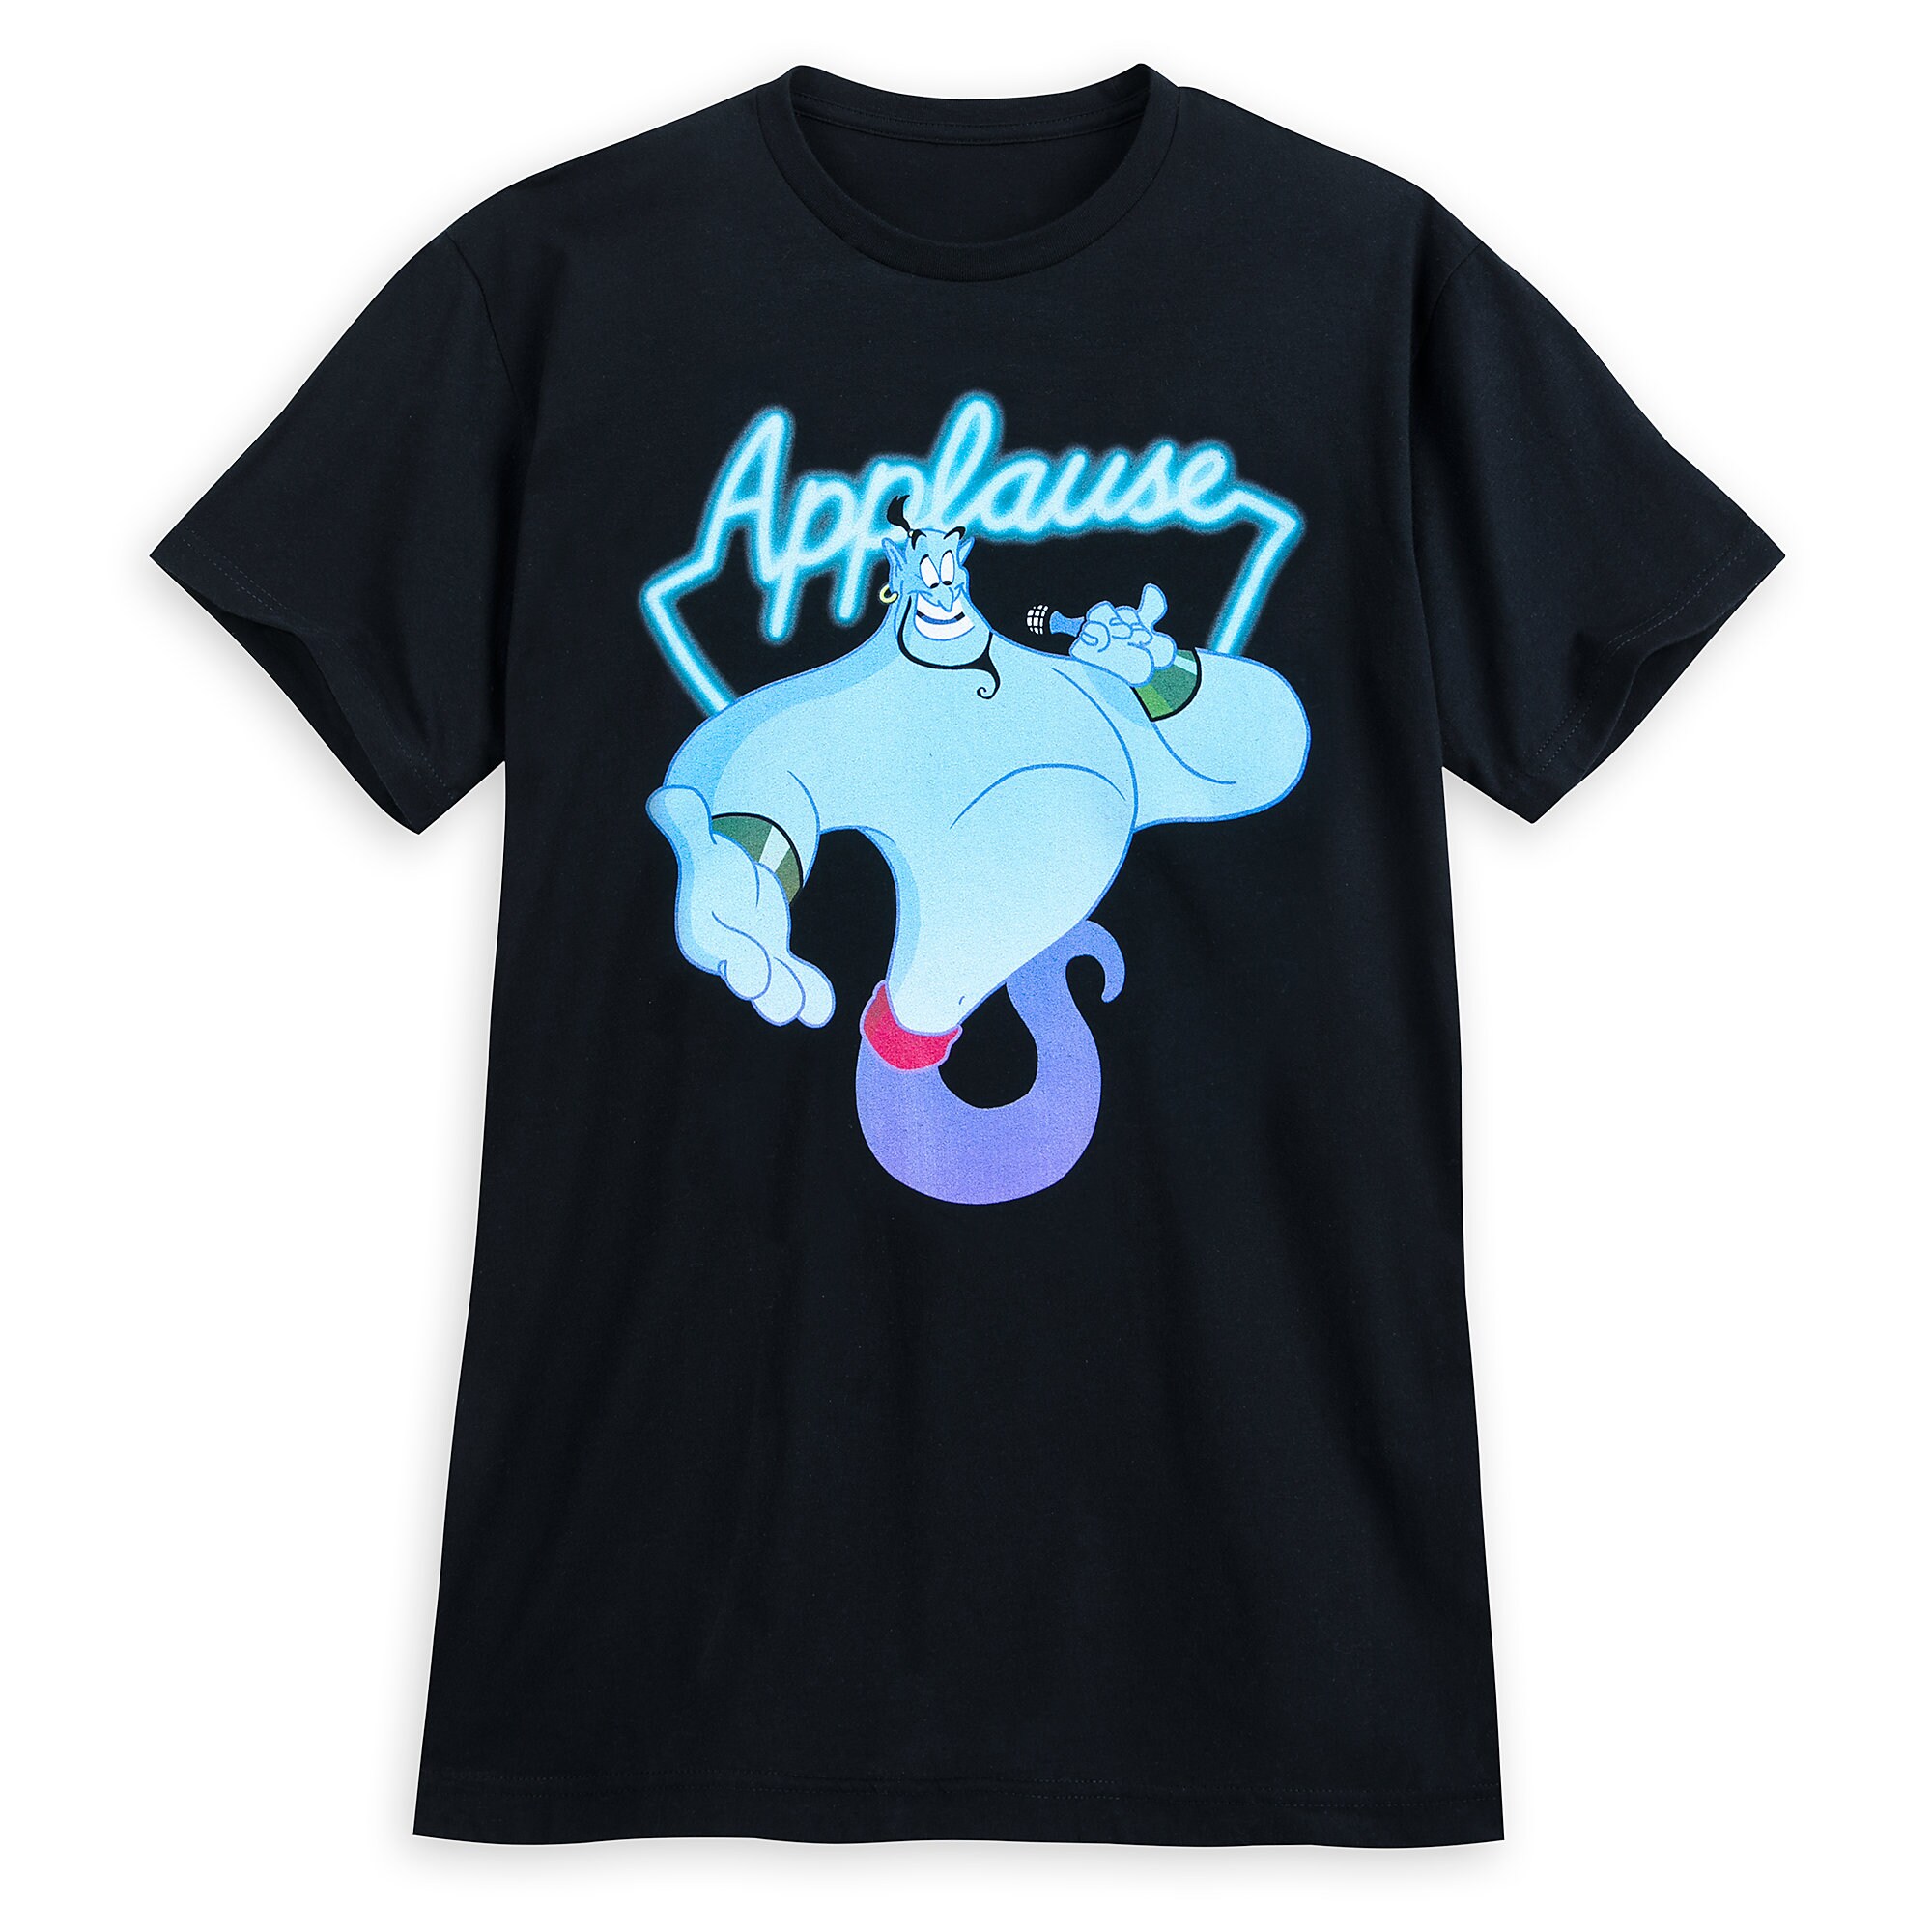 Genie Applause T-Shirt for Men - Aladdin